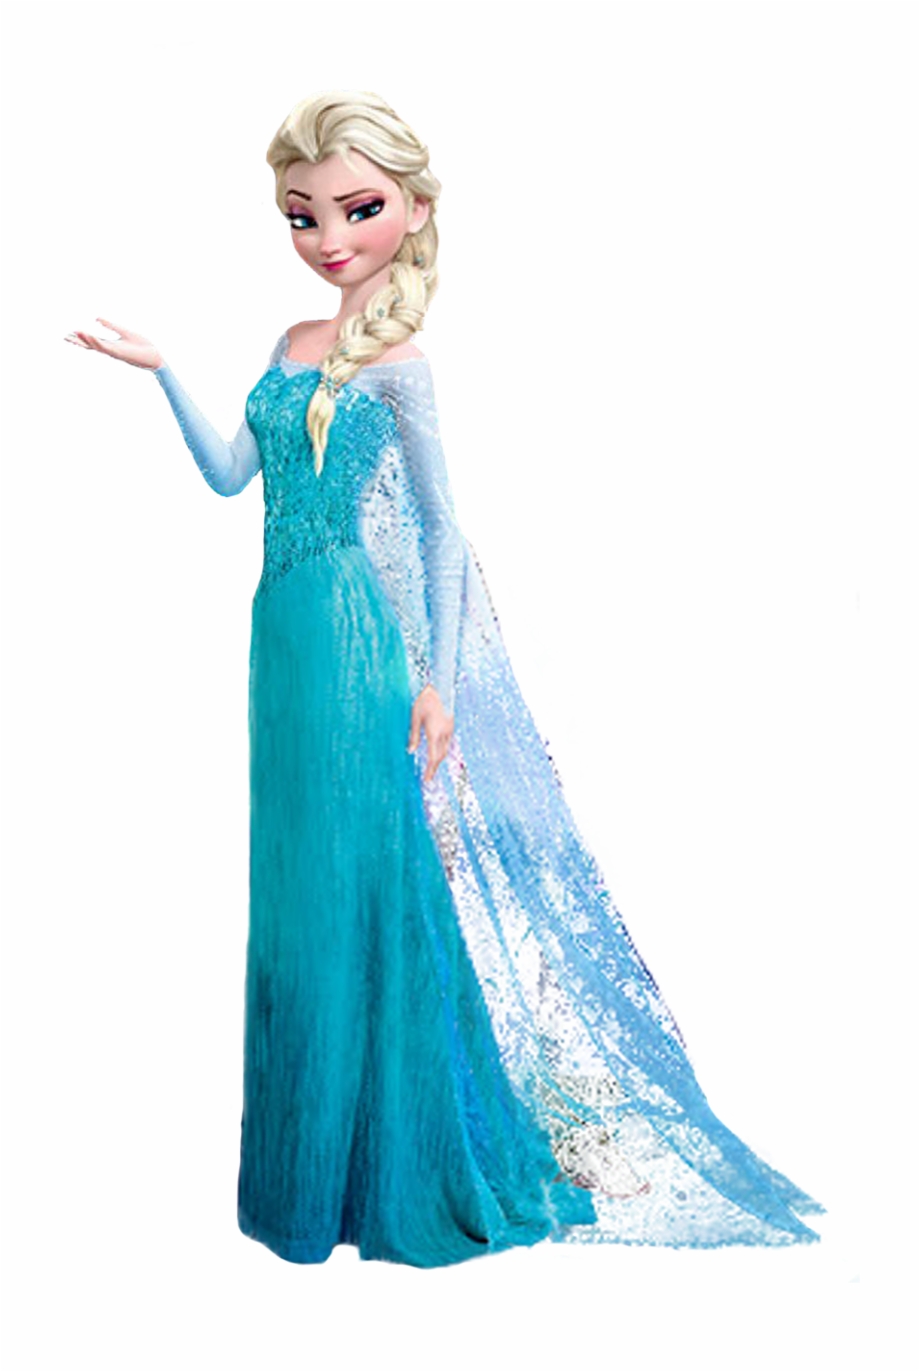 Elsa Frozen Frozen Elsa Poster x Birgün elsa ve anna sihirle oynarken anna